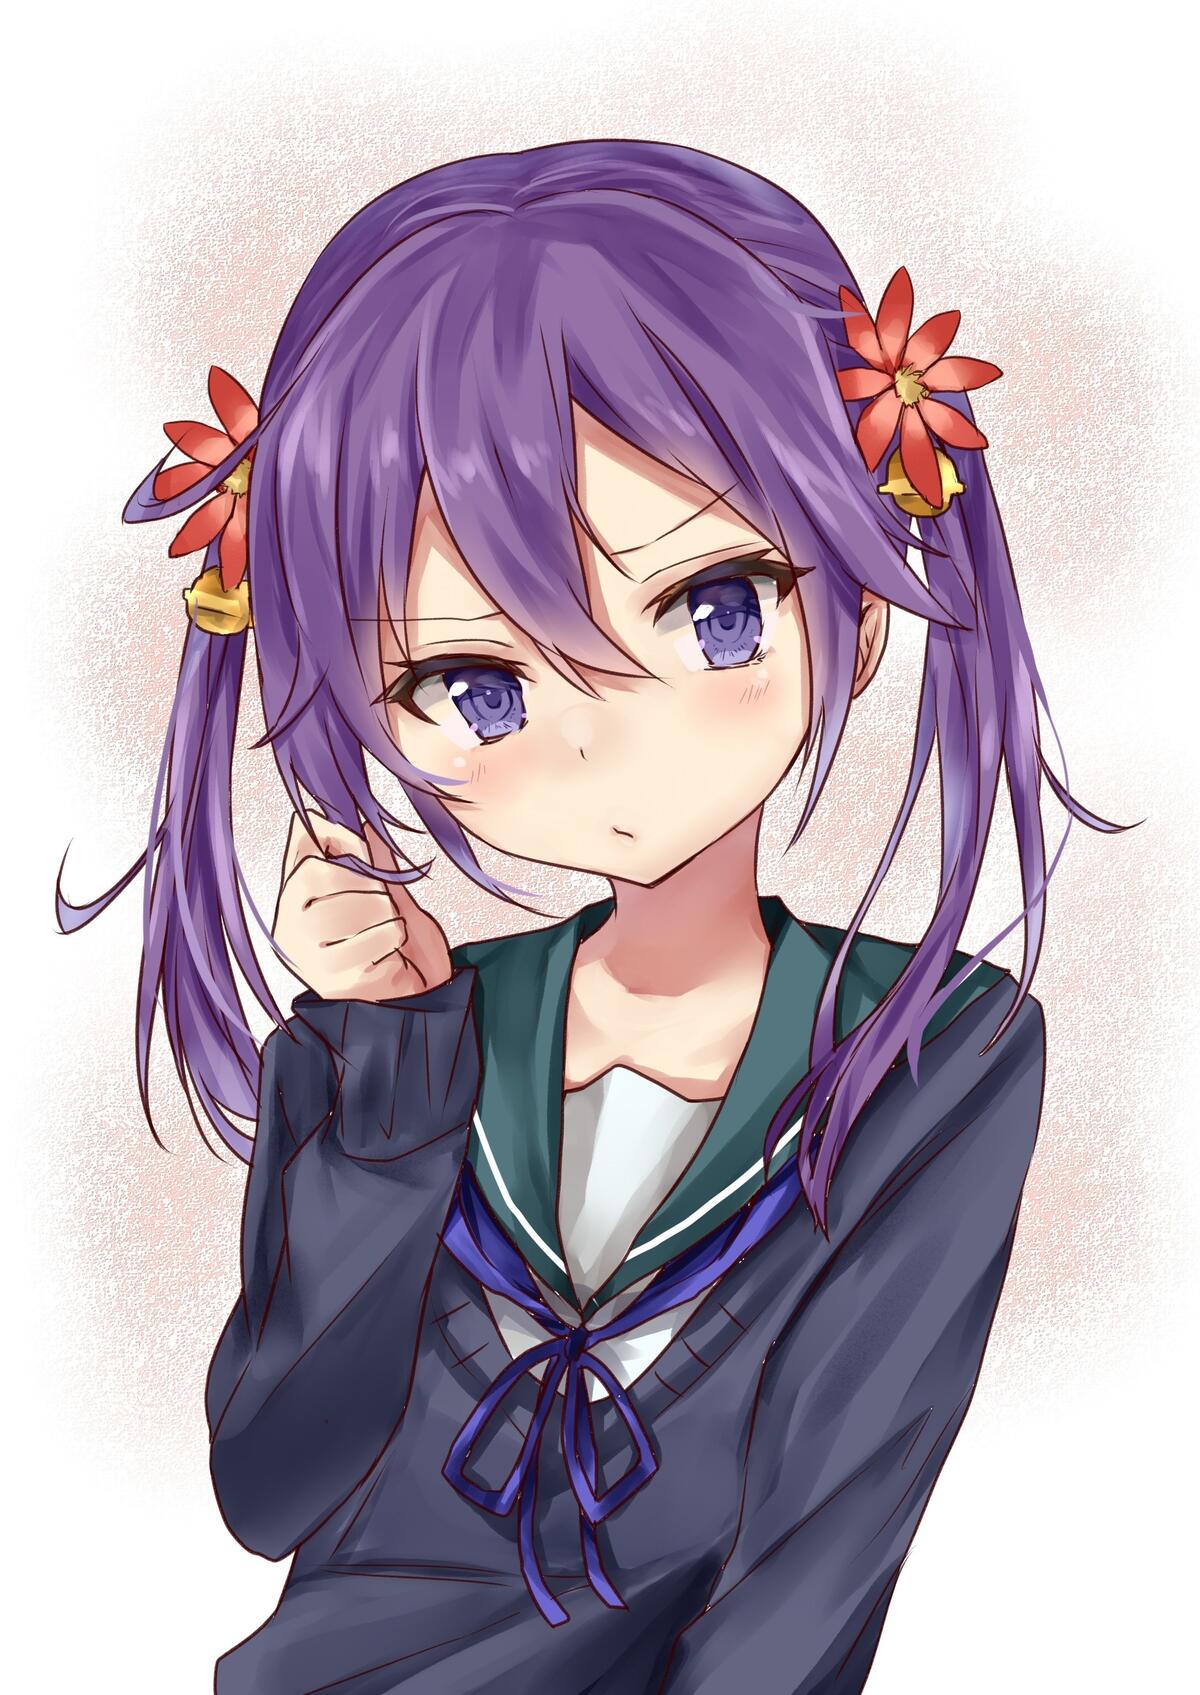 Anime girl with purple hair.